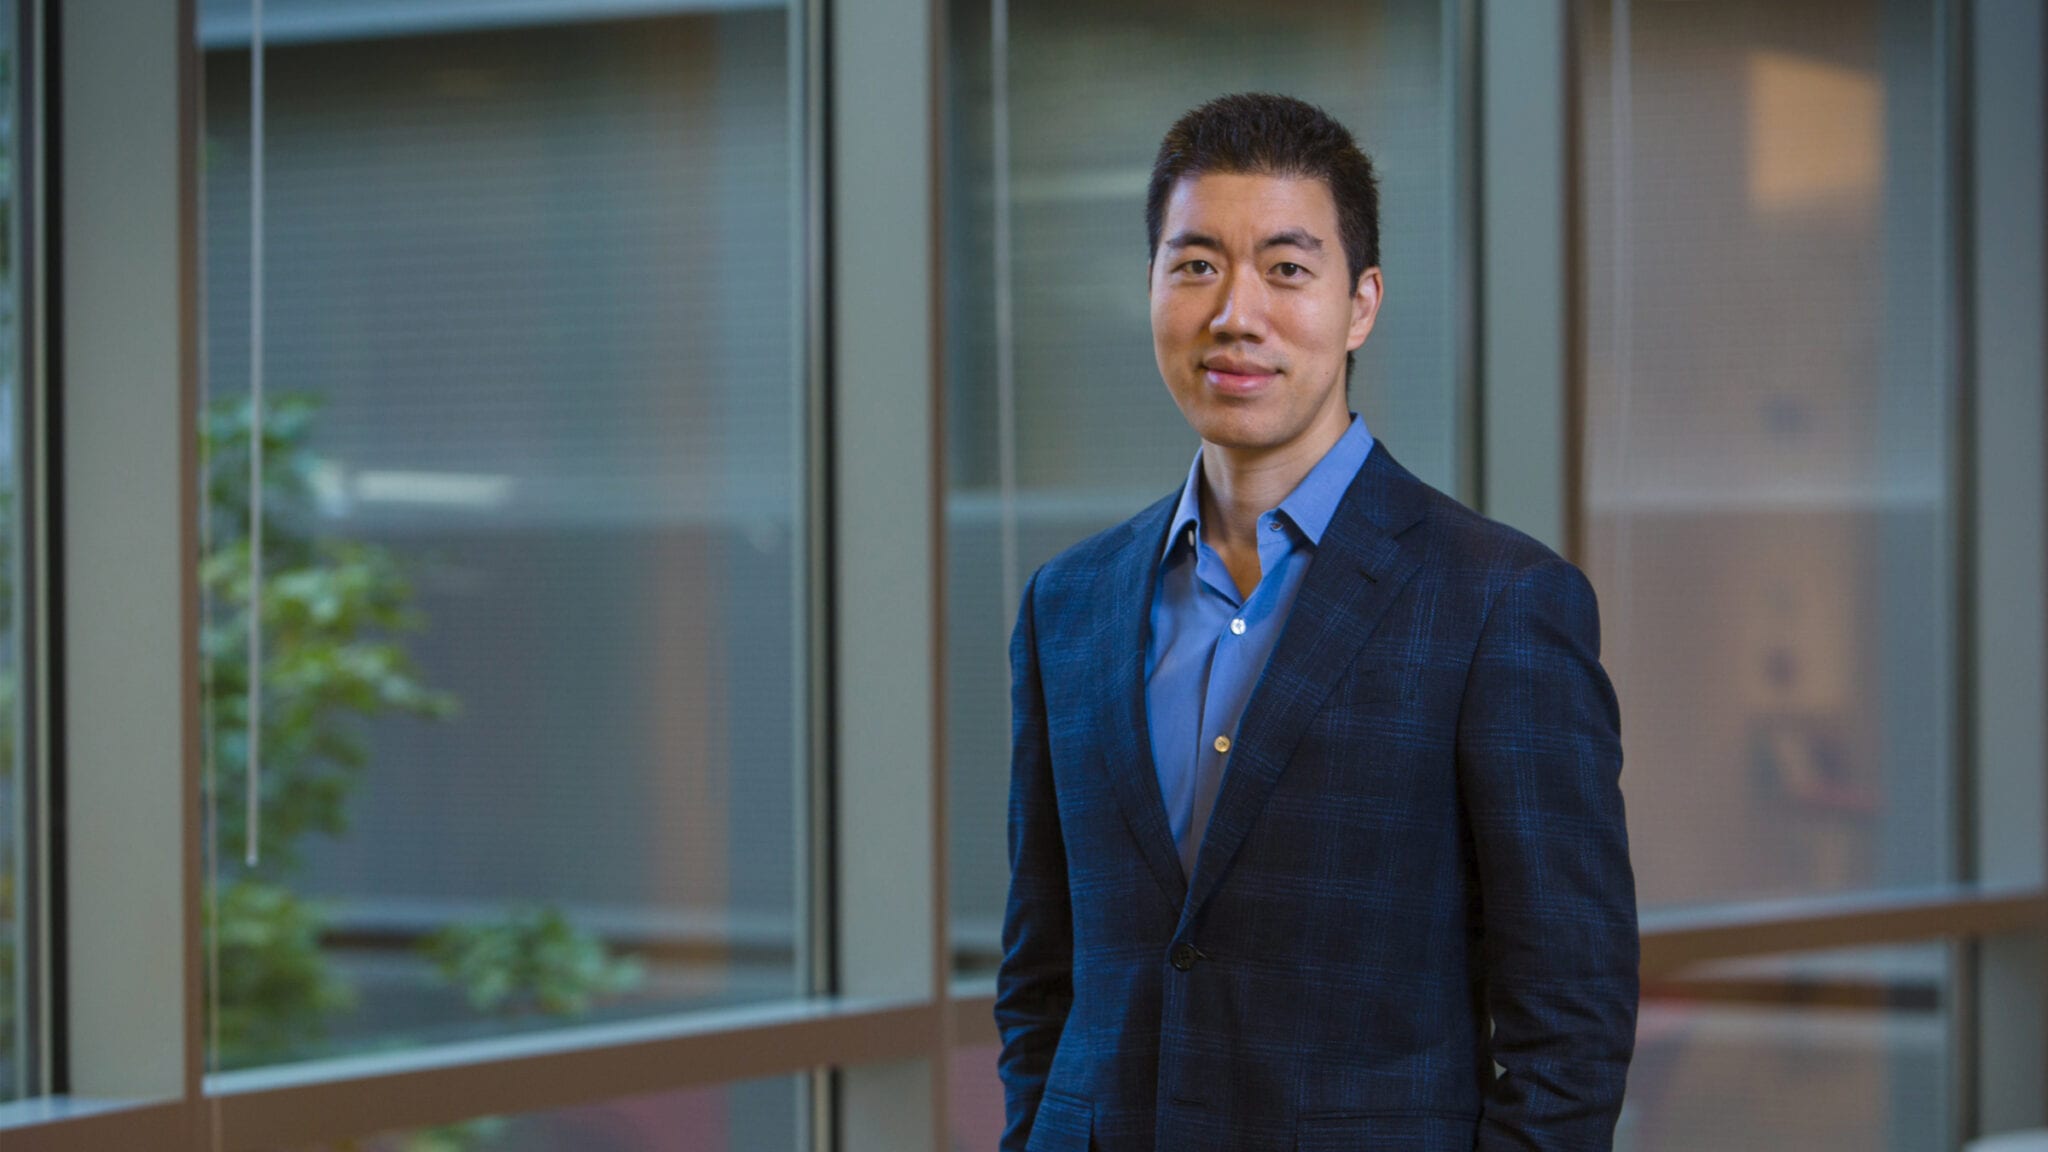 David Liu's biotech shoots for $150M+ IPO raise to develop CRISPR 3.0